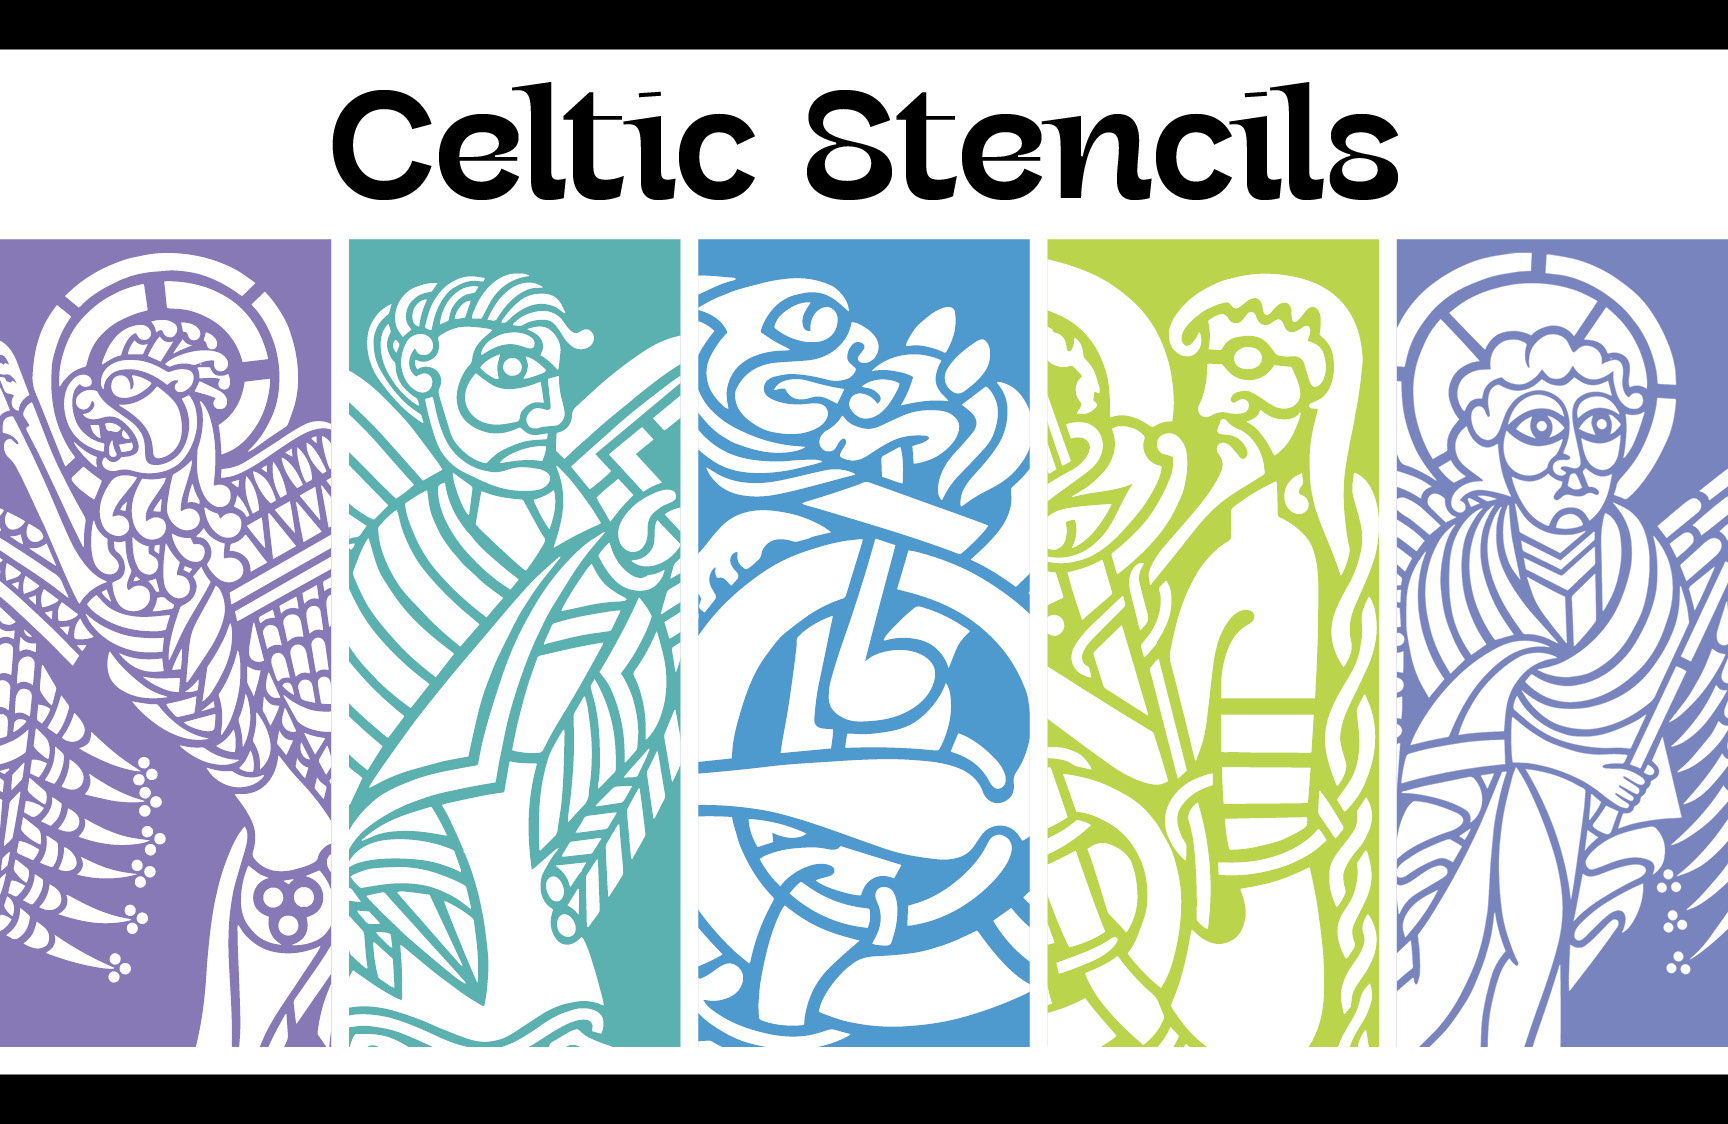 Celtic Stencils by Co Spinhoven on Granite Bay Graphic Design